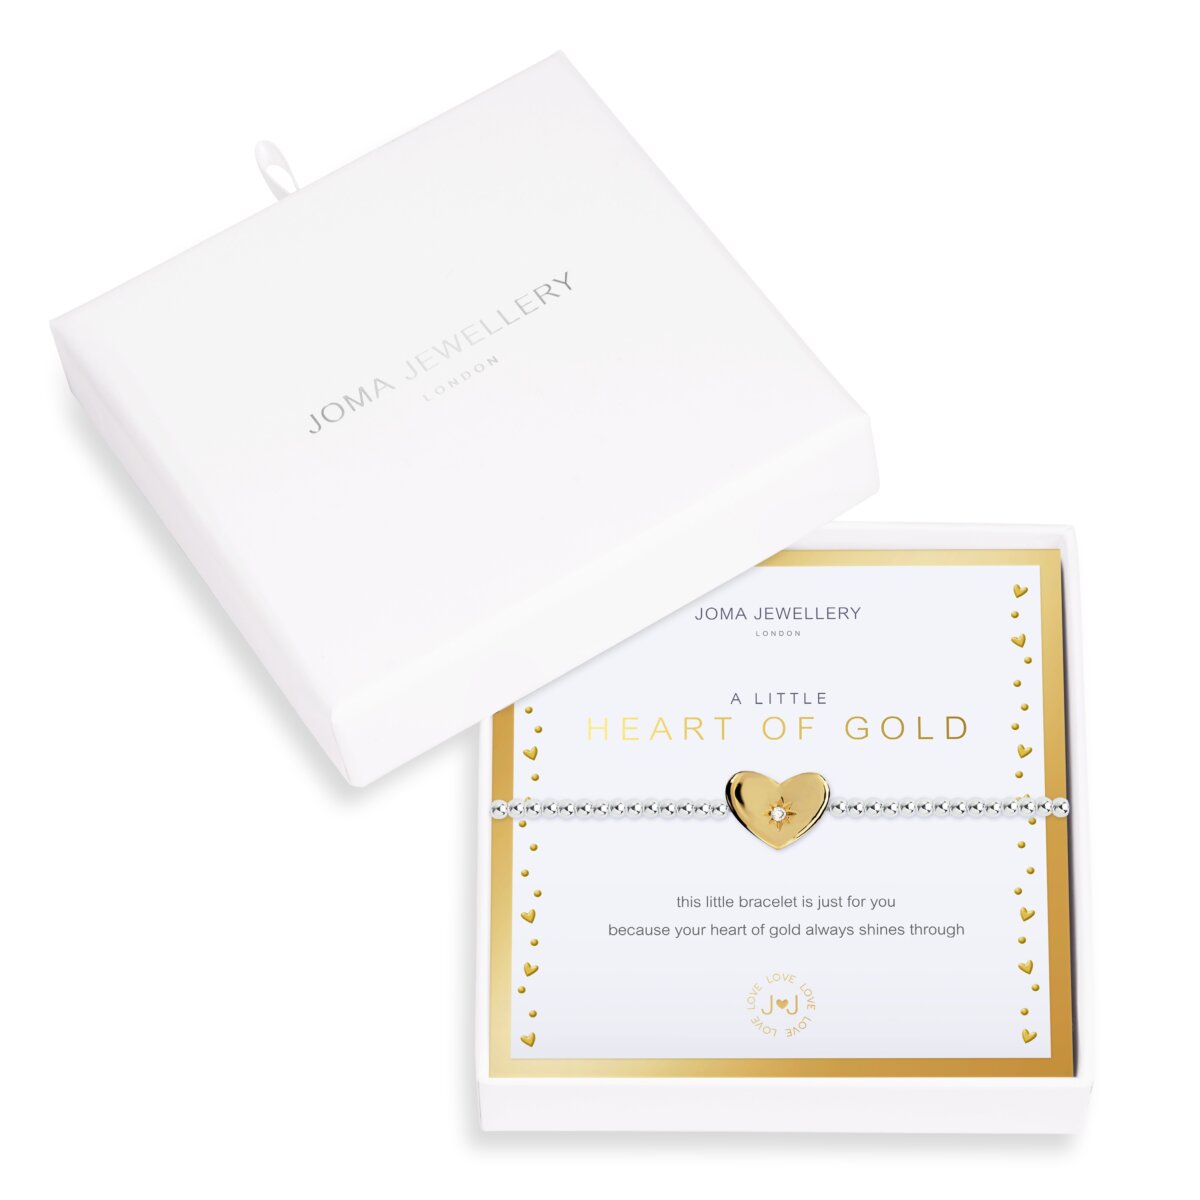 Joma Jewellery Boxed a little Heart of Gold Bracelet